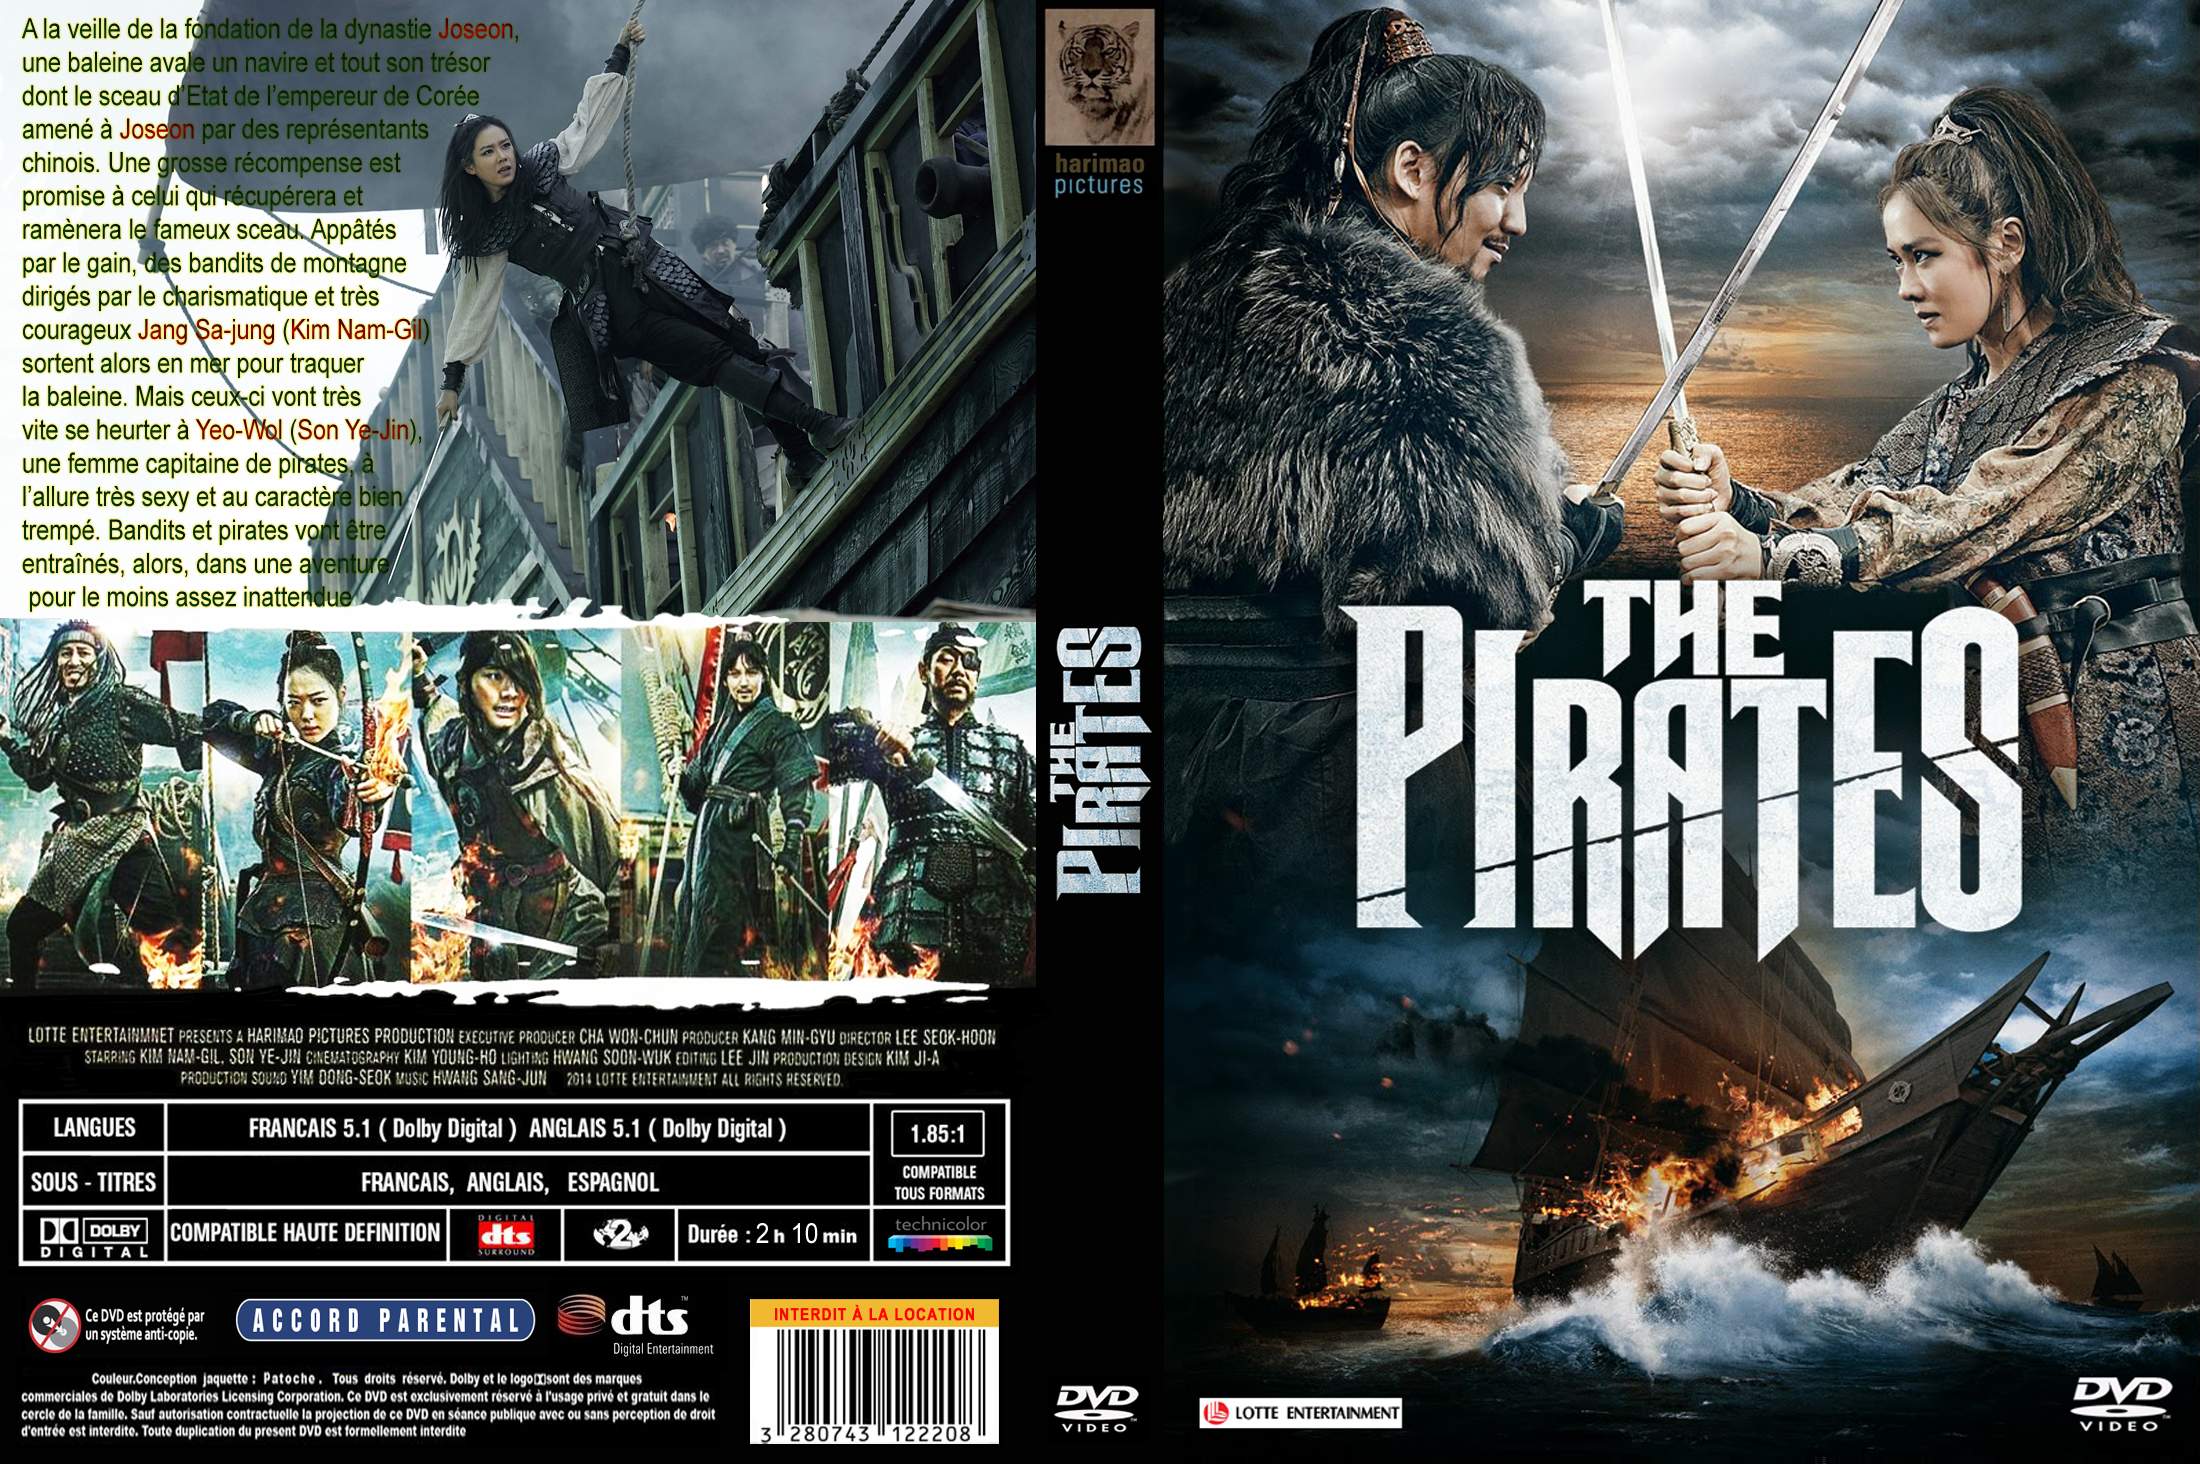 Jaquette DVD The Pirates custom